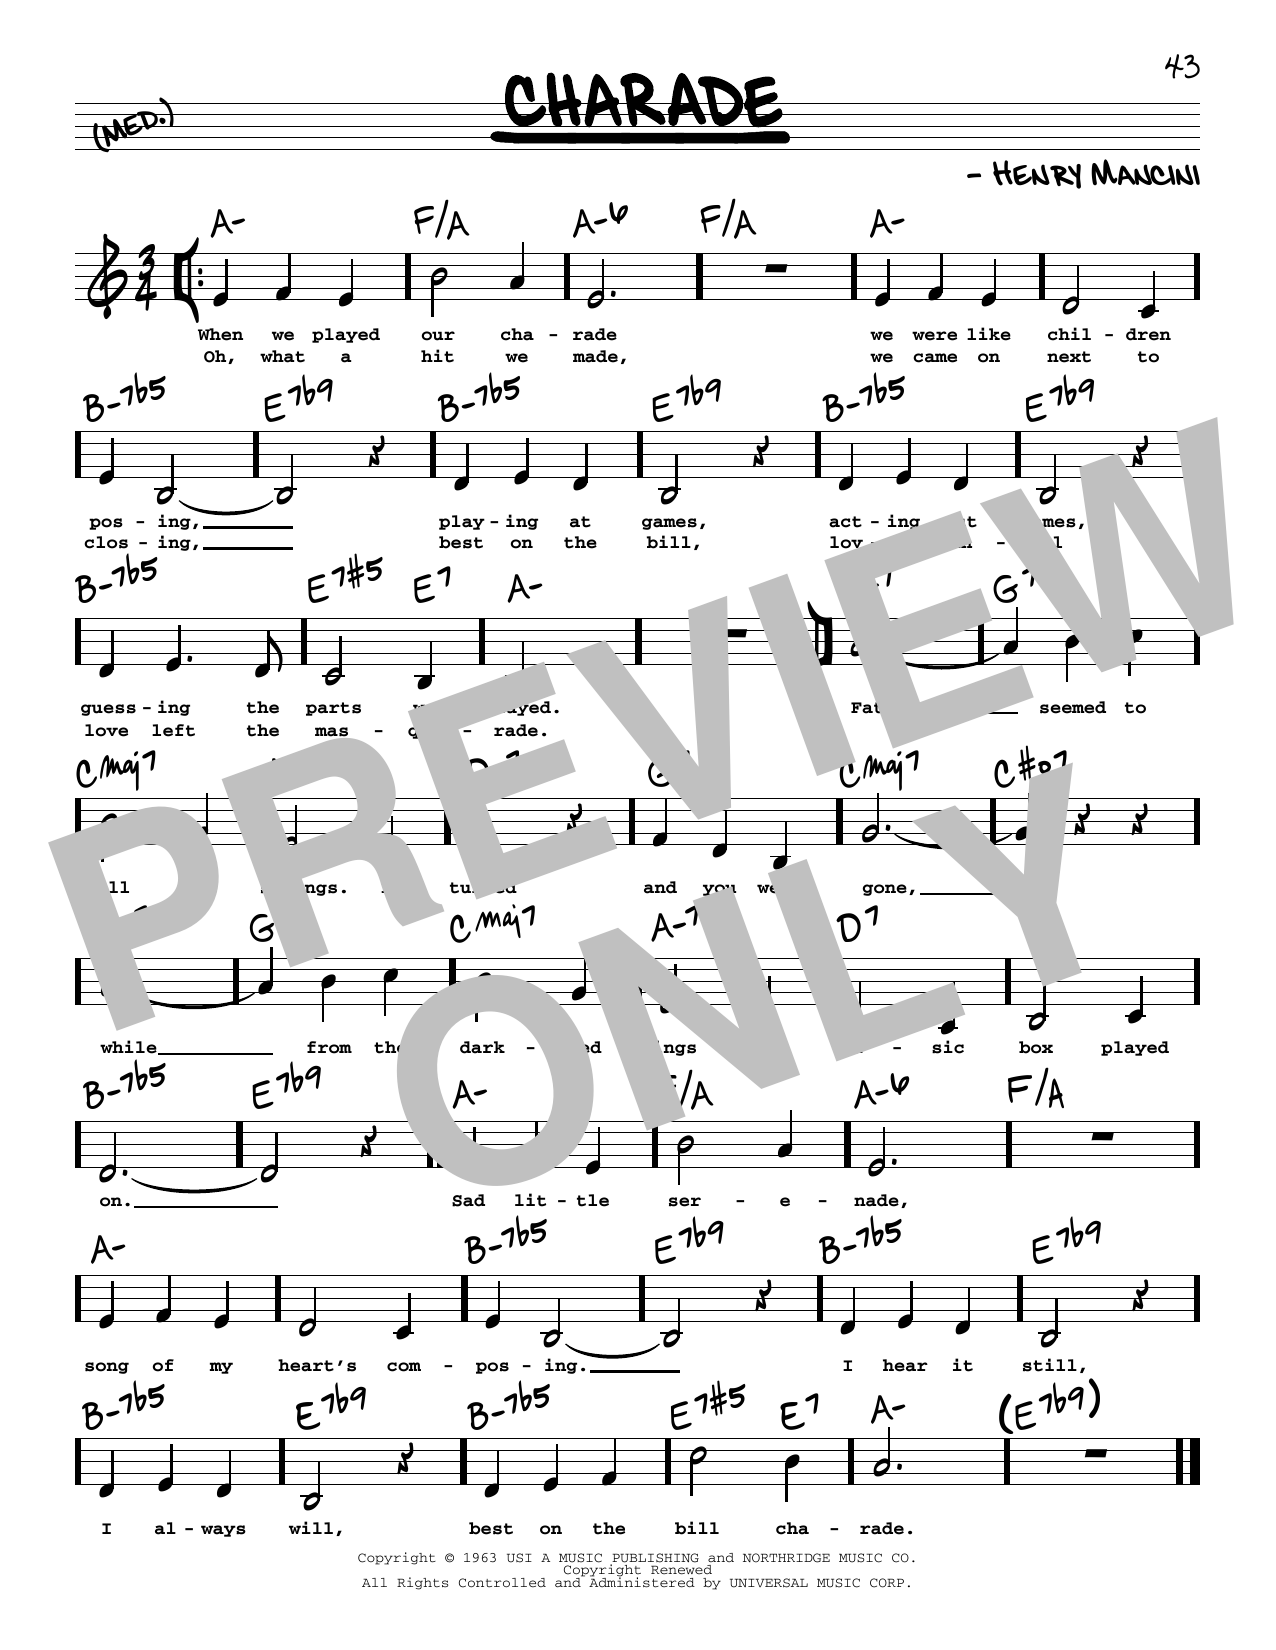 Henry Mancini Charade (Low Voice) sheet music notes printable PDF score